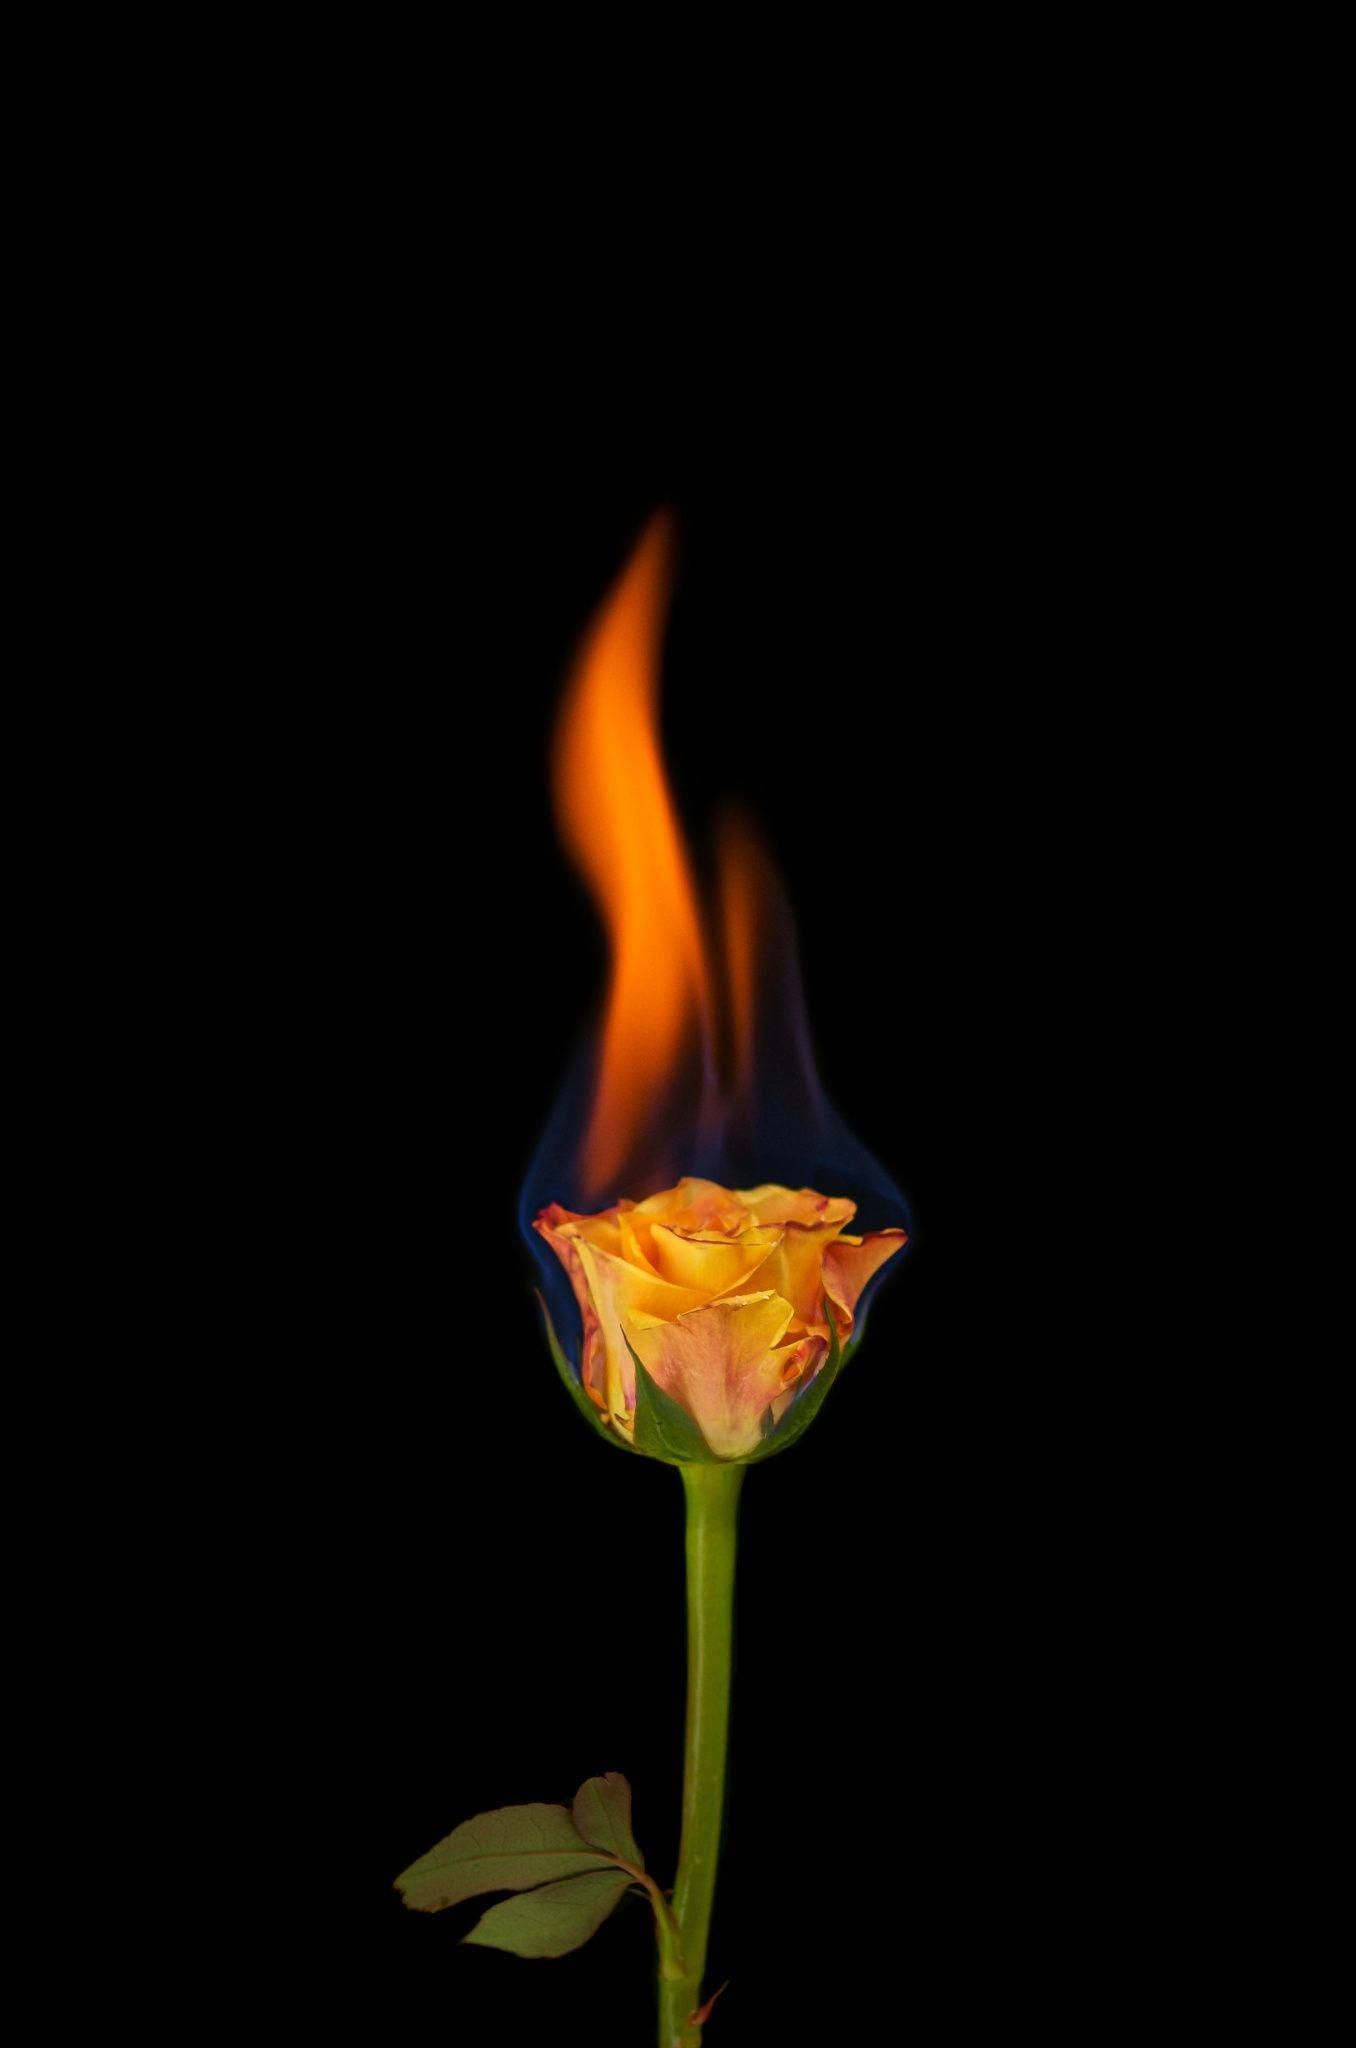 ArtsAndCraftsHousePlans. Rose on fire, Aesthetic roses, Fire photography